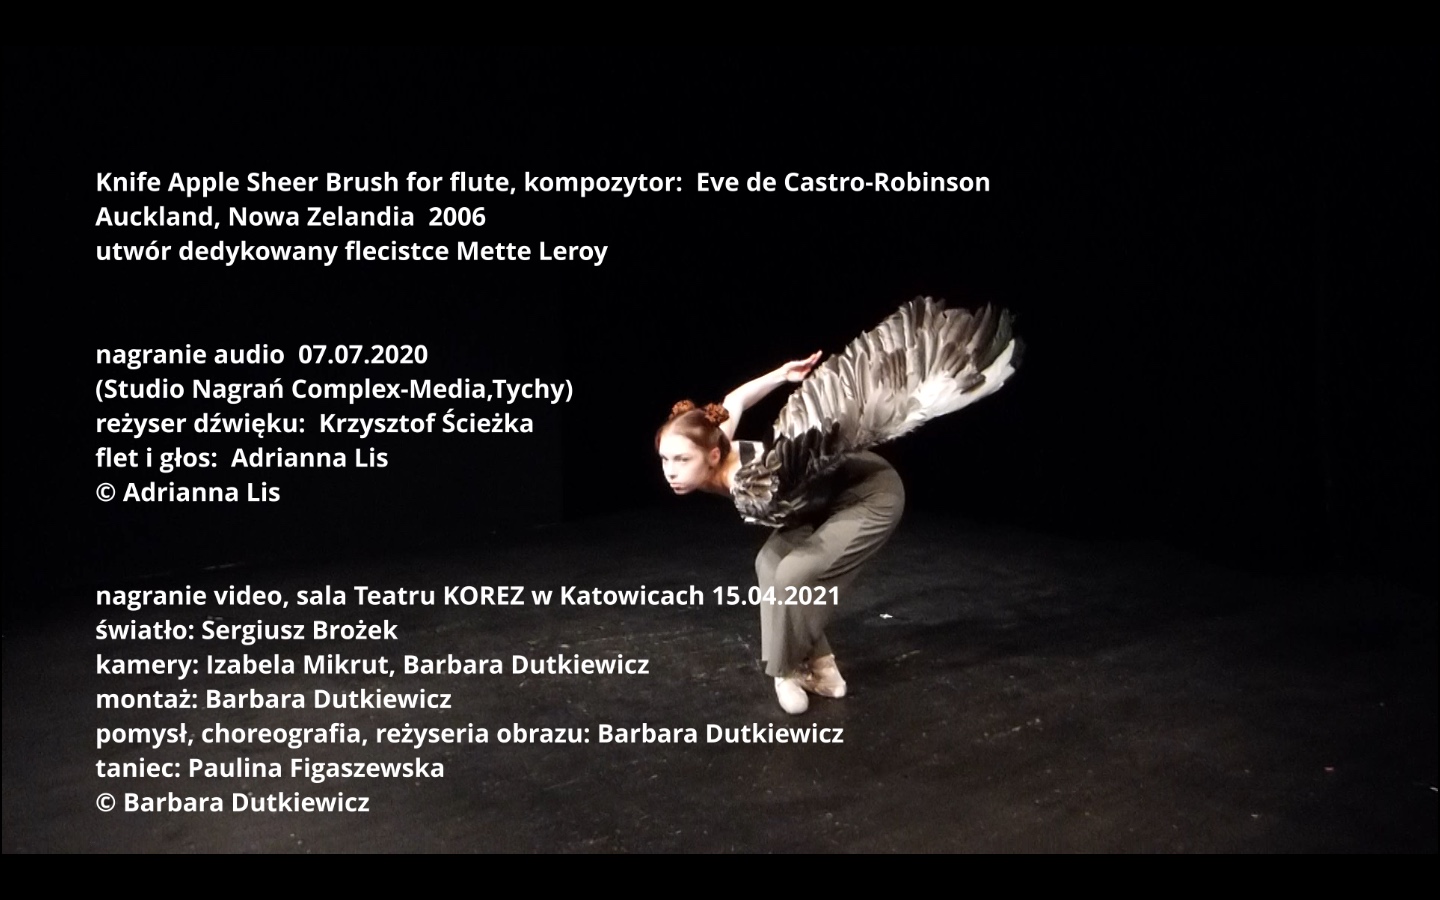 e.castro-robinson, knife apple sheer brush, barbara dutkiewicz - choreografia muzyki, rytmiczny/choreograficzny projekt video